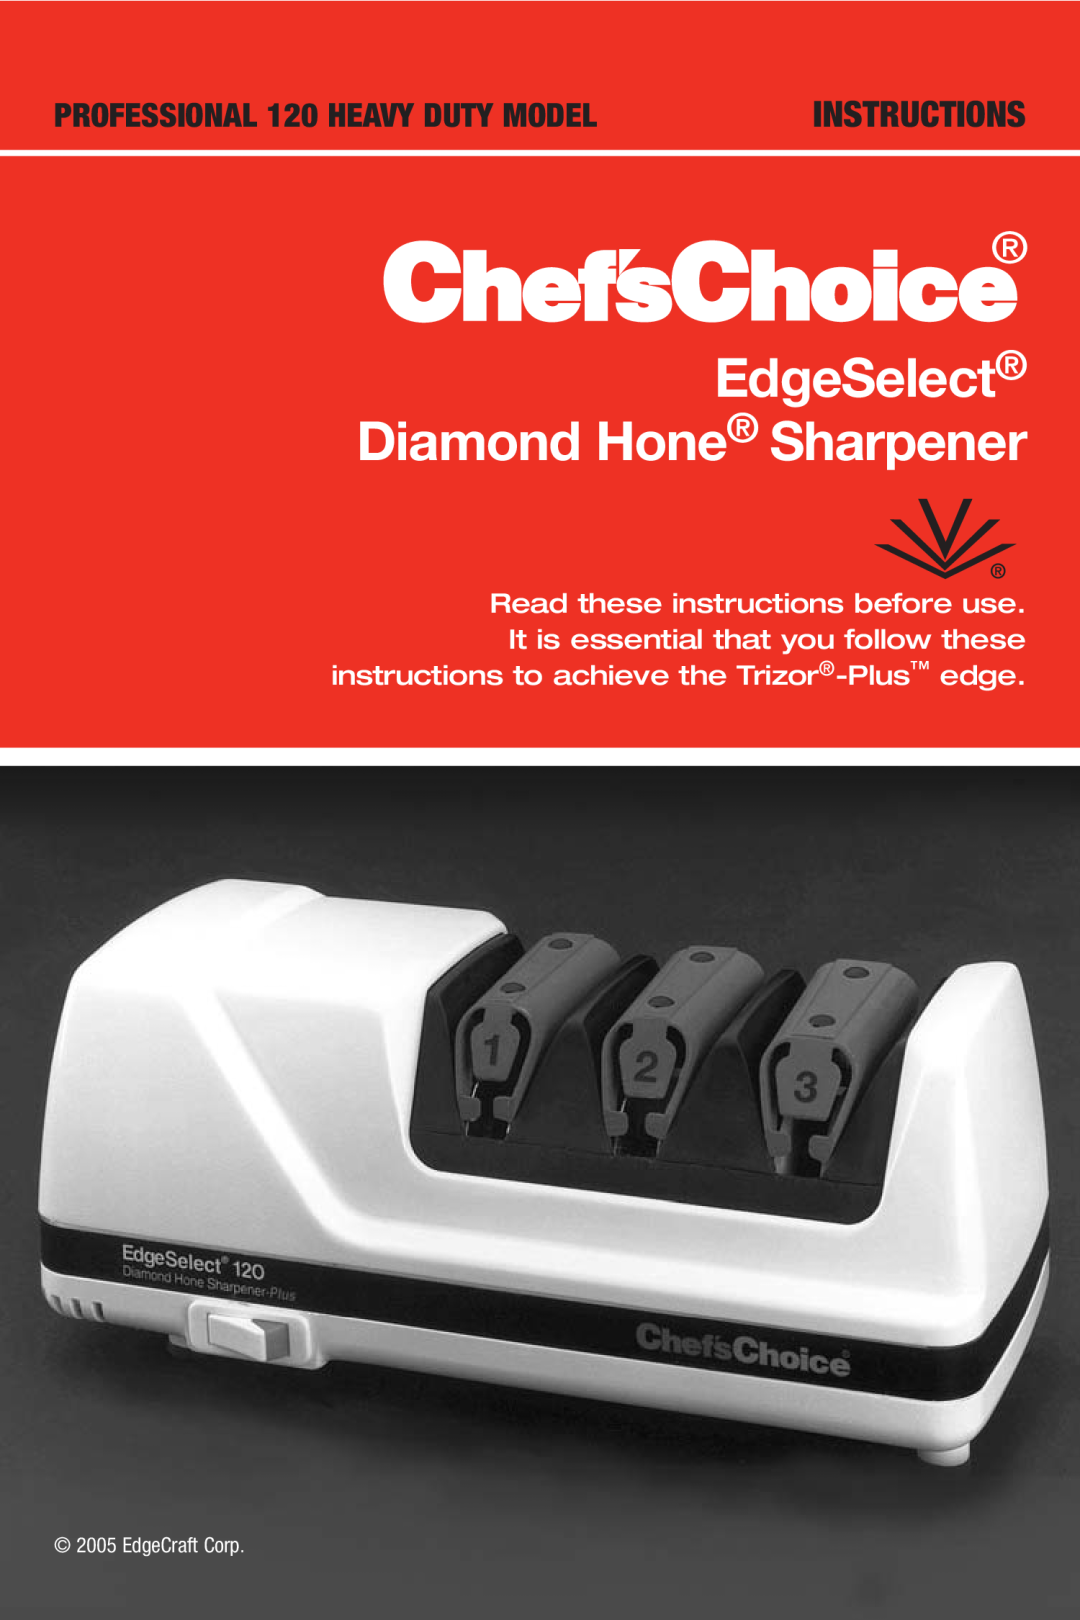 Edge Craft manual EdgeSelect Diamond Hone Sharpener, PROFESSIONAL 120 HEAVY DUTY MODEL, Instructions, EdgeCraft Corp 